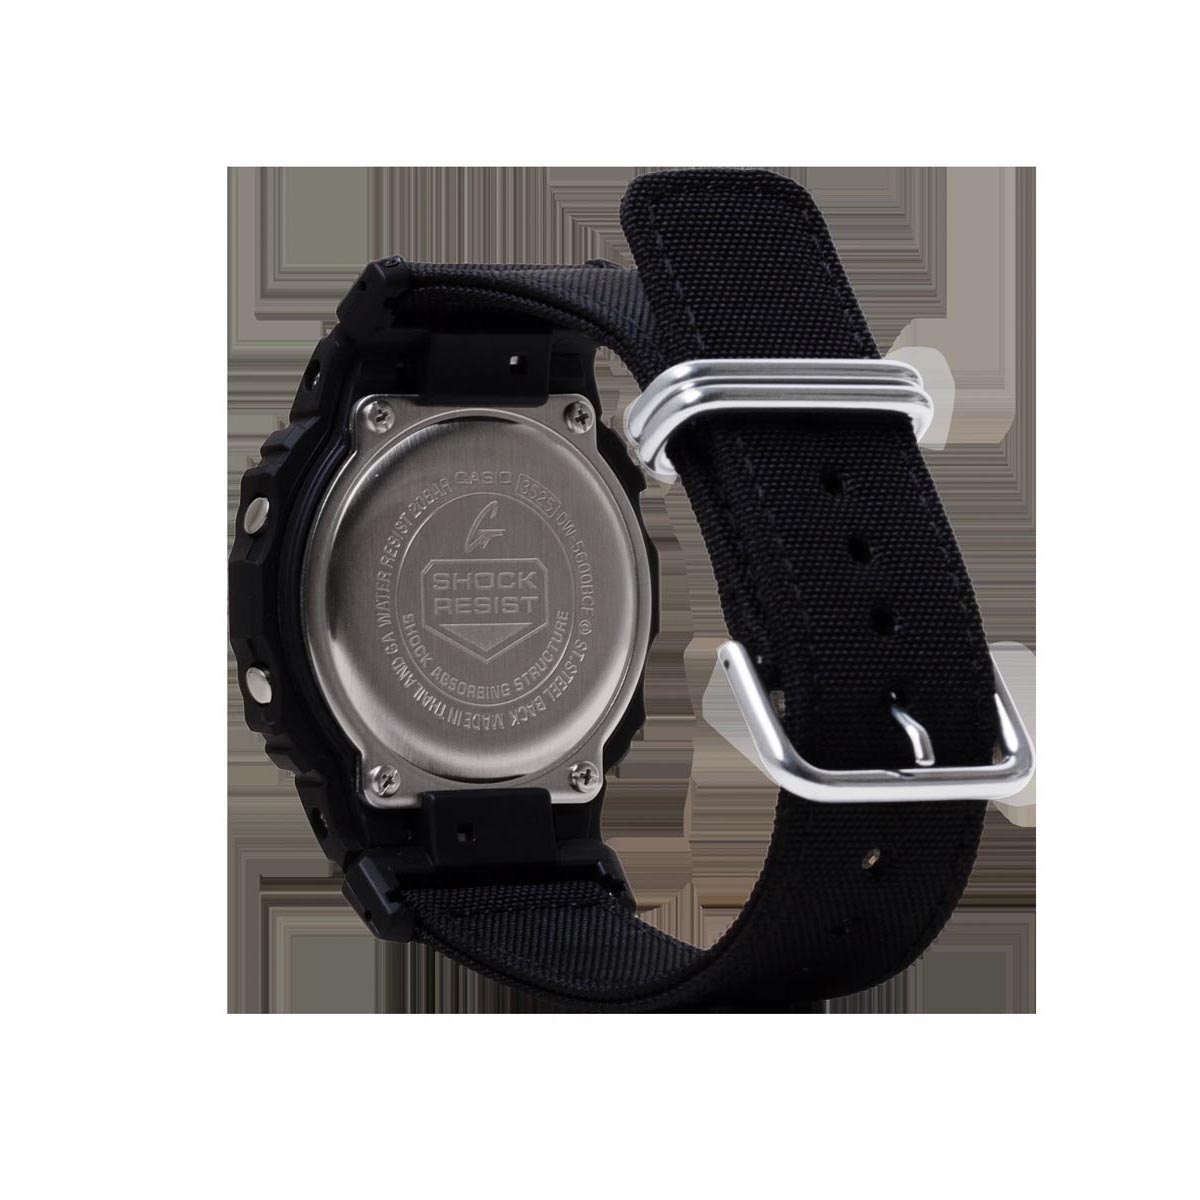 G-Shock Digital Men's Watch with Black Cordura Eco Band (quartz movement)